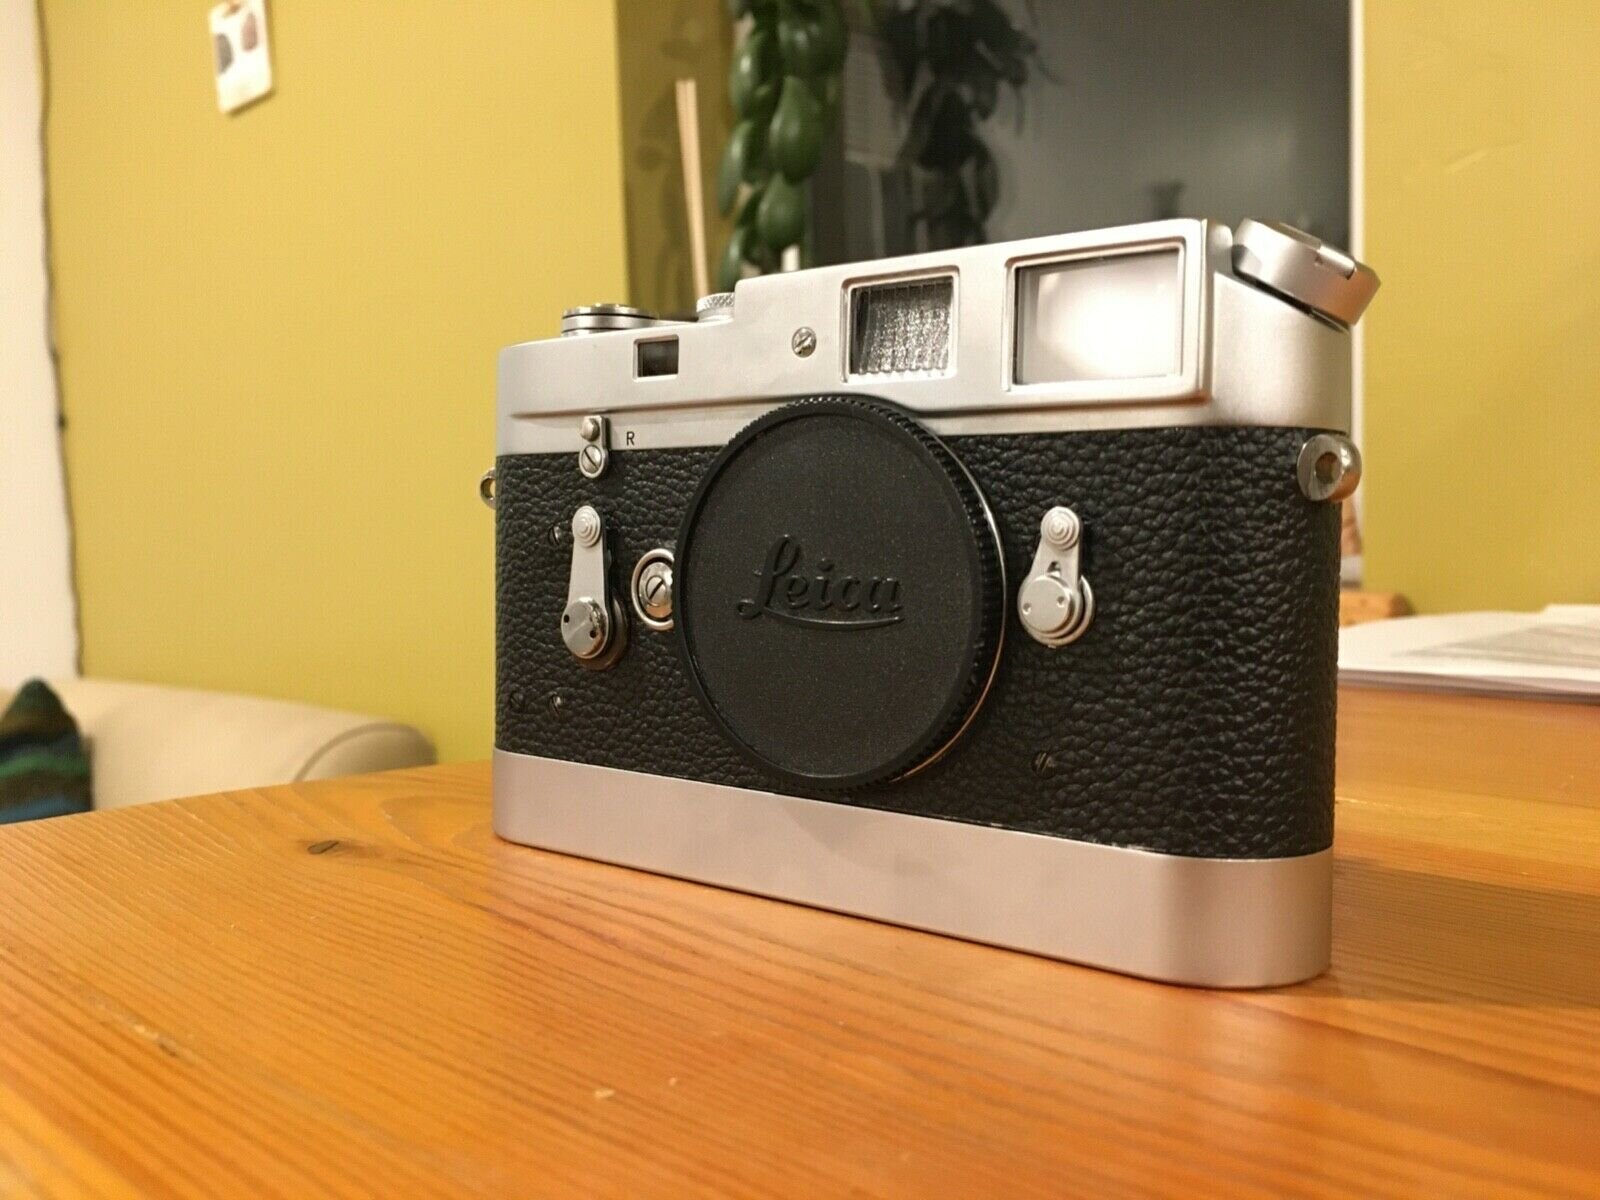 Leica M4 modified by DAG Camera